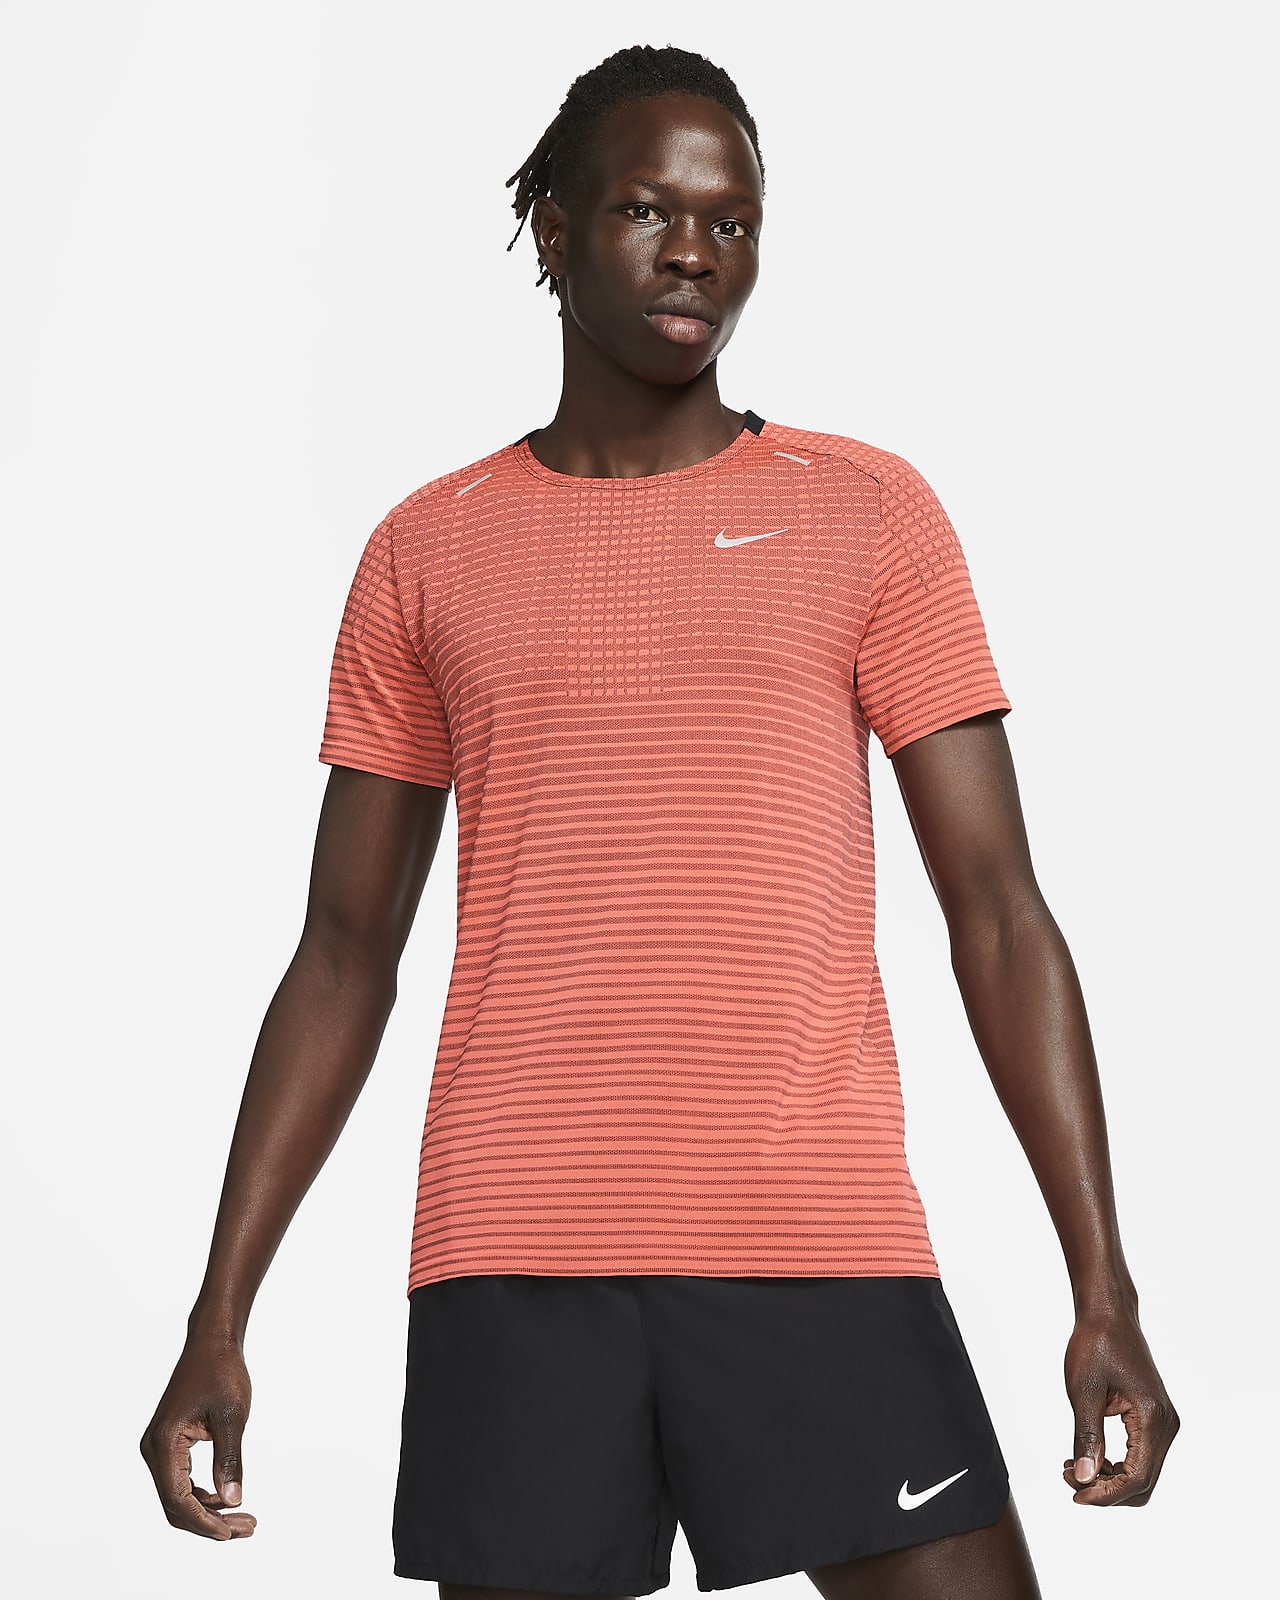 Nike TechKnit Ultra Men's Running Top 